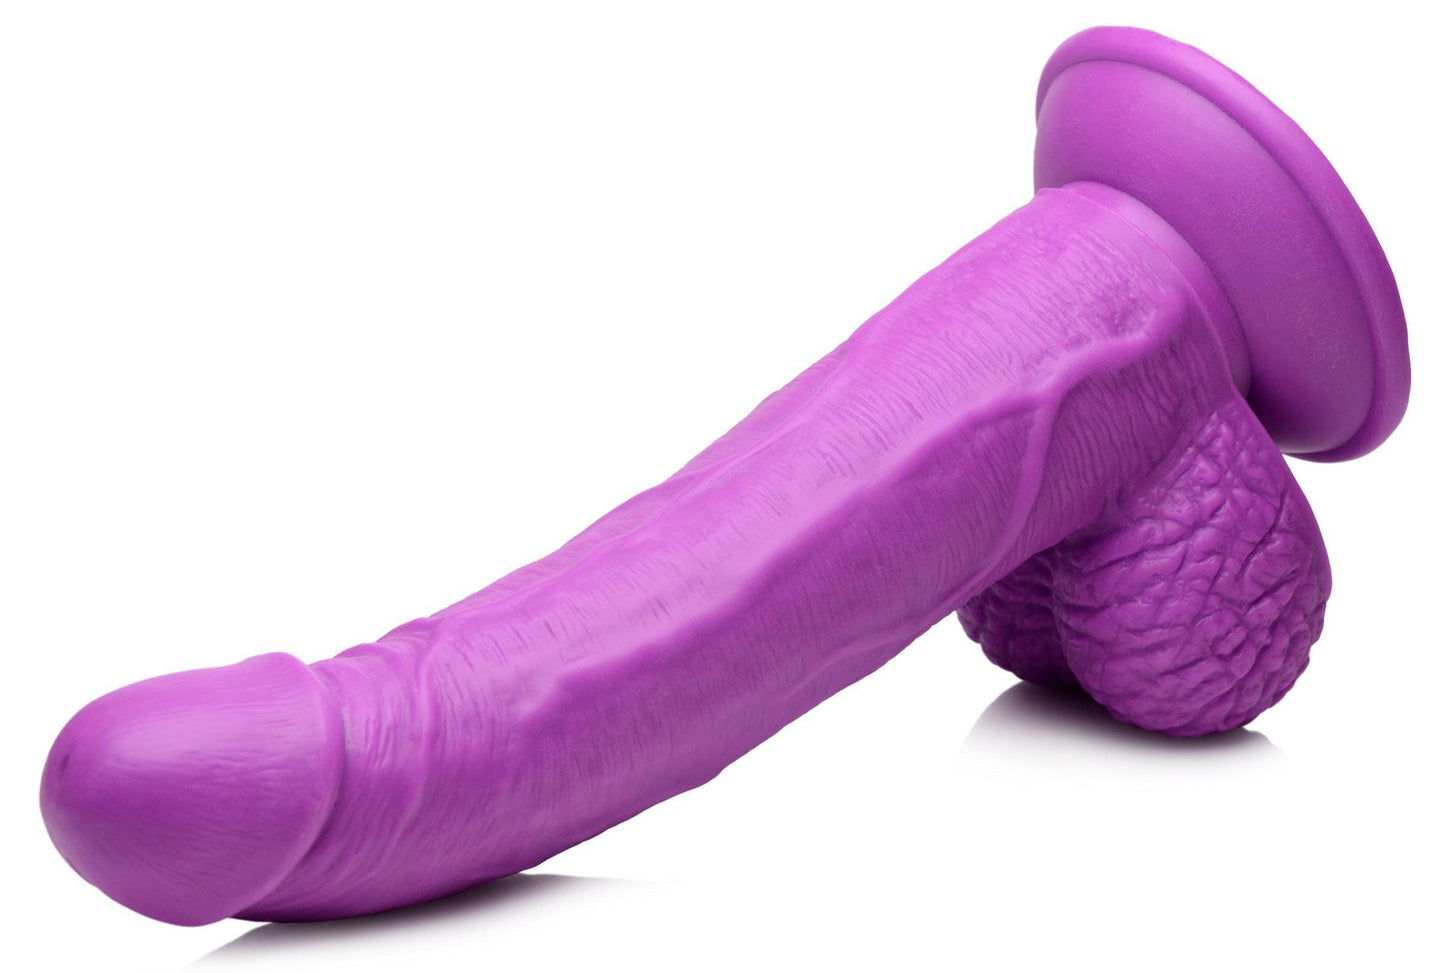 Pop Pecker 7.5 Inch Dildo With Balls - Purple - My Sex Toy Hub